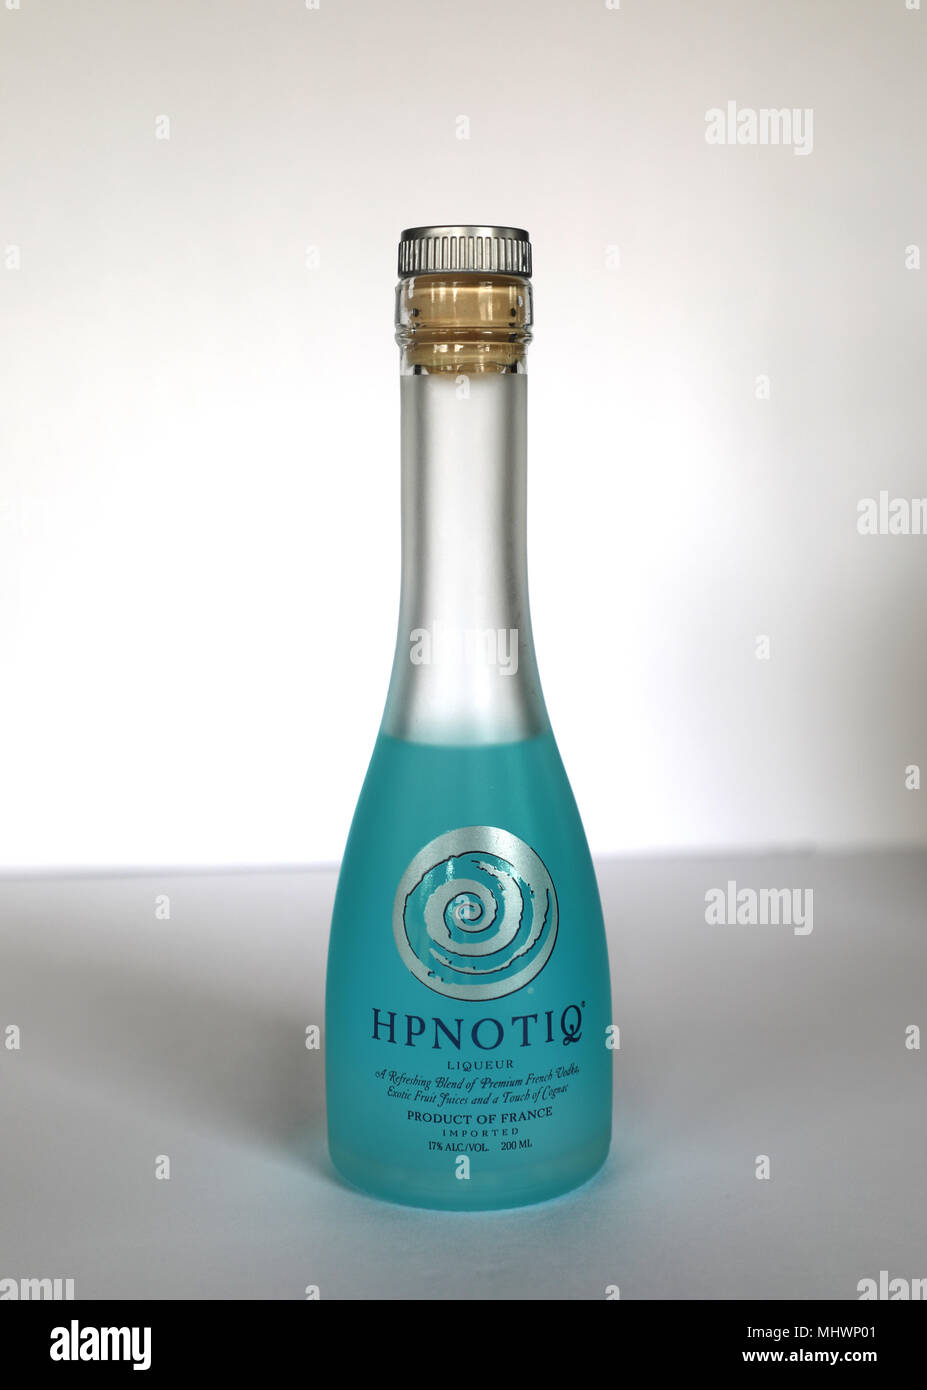 Hpnotiq Azul Vodka licor de exóticas y 17% de botella de coñac sobre blanco producto de Francia Fotografía de stock - Alamy